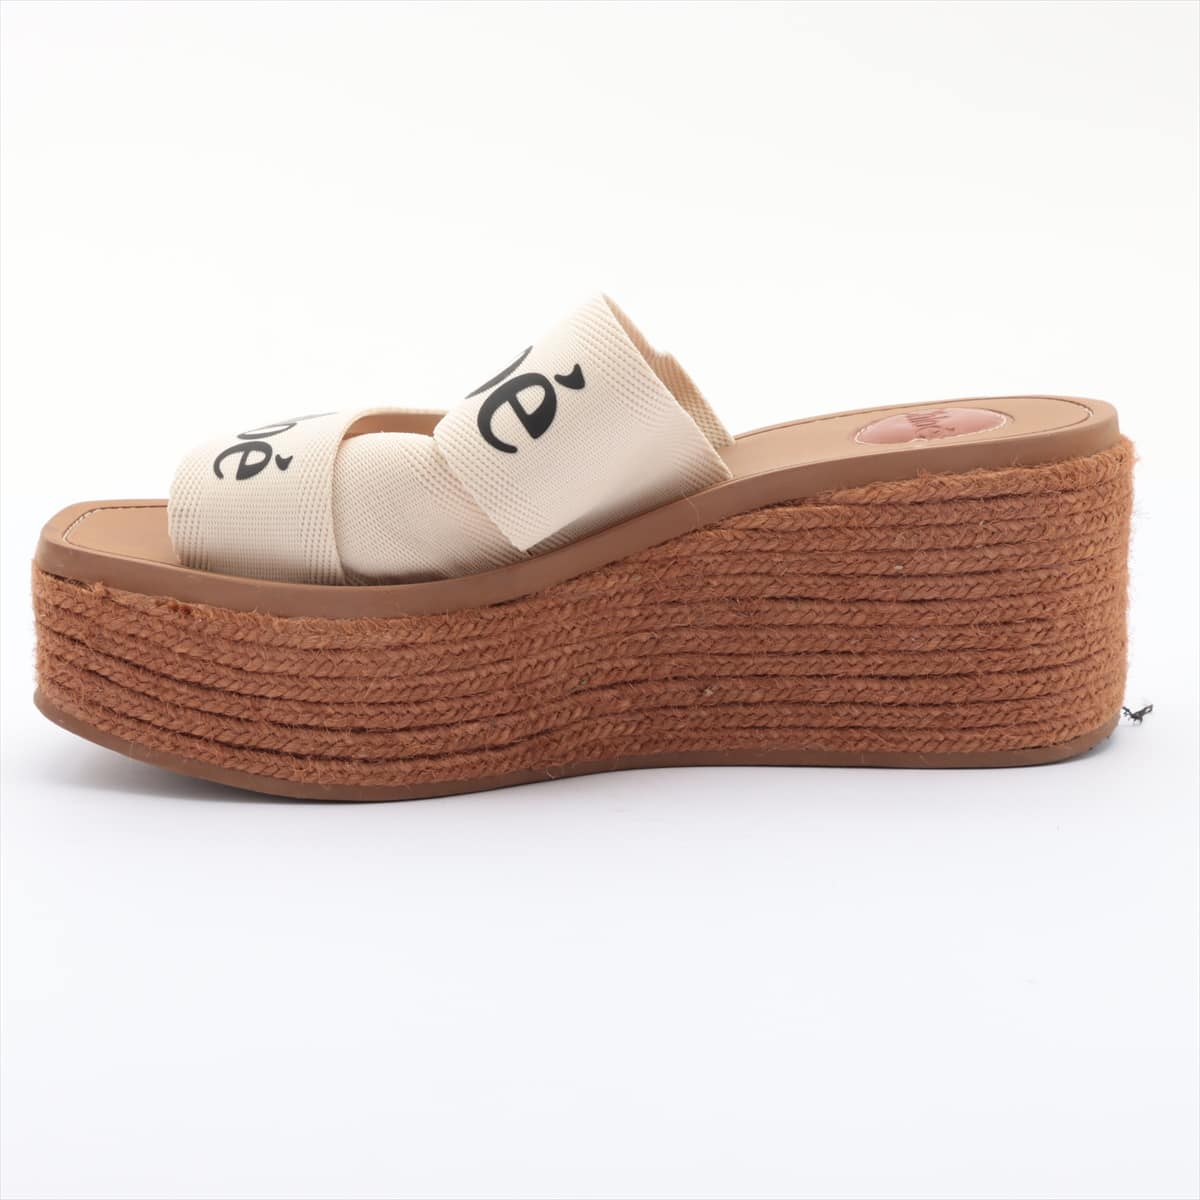 Chloe Woody Leather Sandals 38 Ladies' White x brown